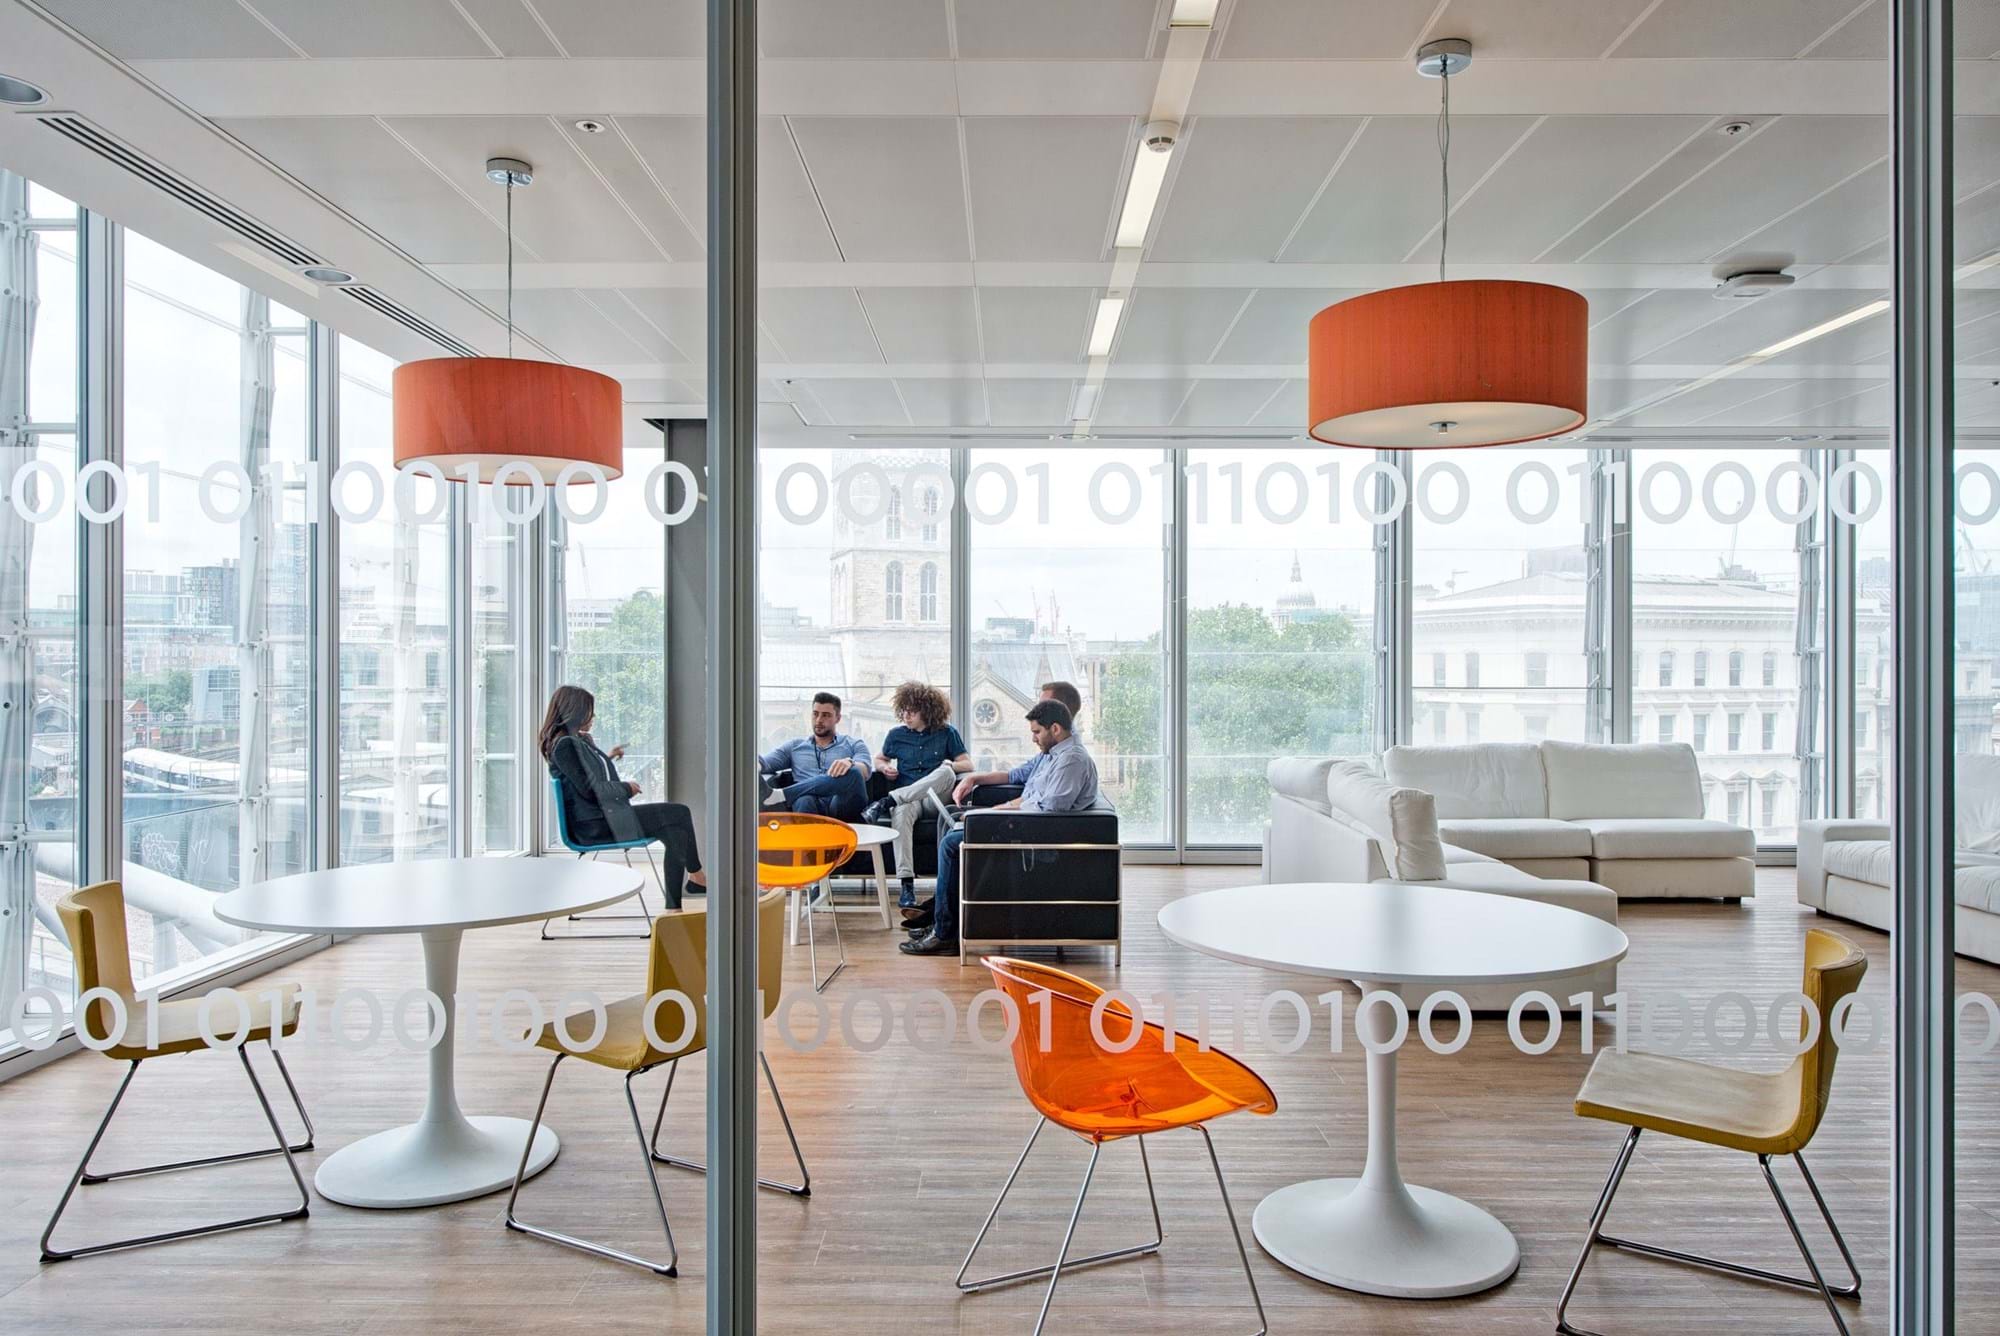 Modus Workspace office design, fit out and refurbishment - Teradata - Reception - Teradata 04 highres sRGB.jpg